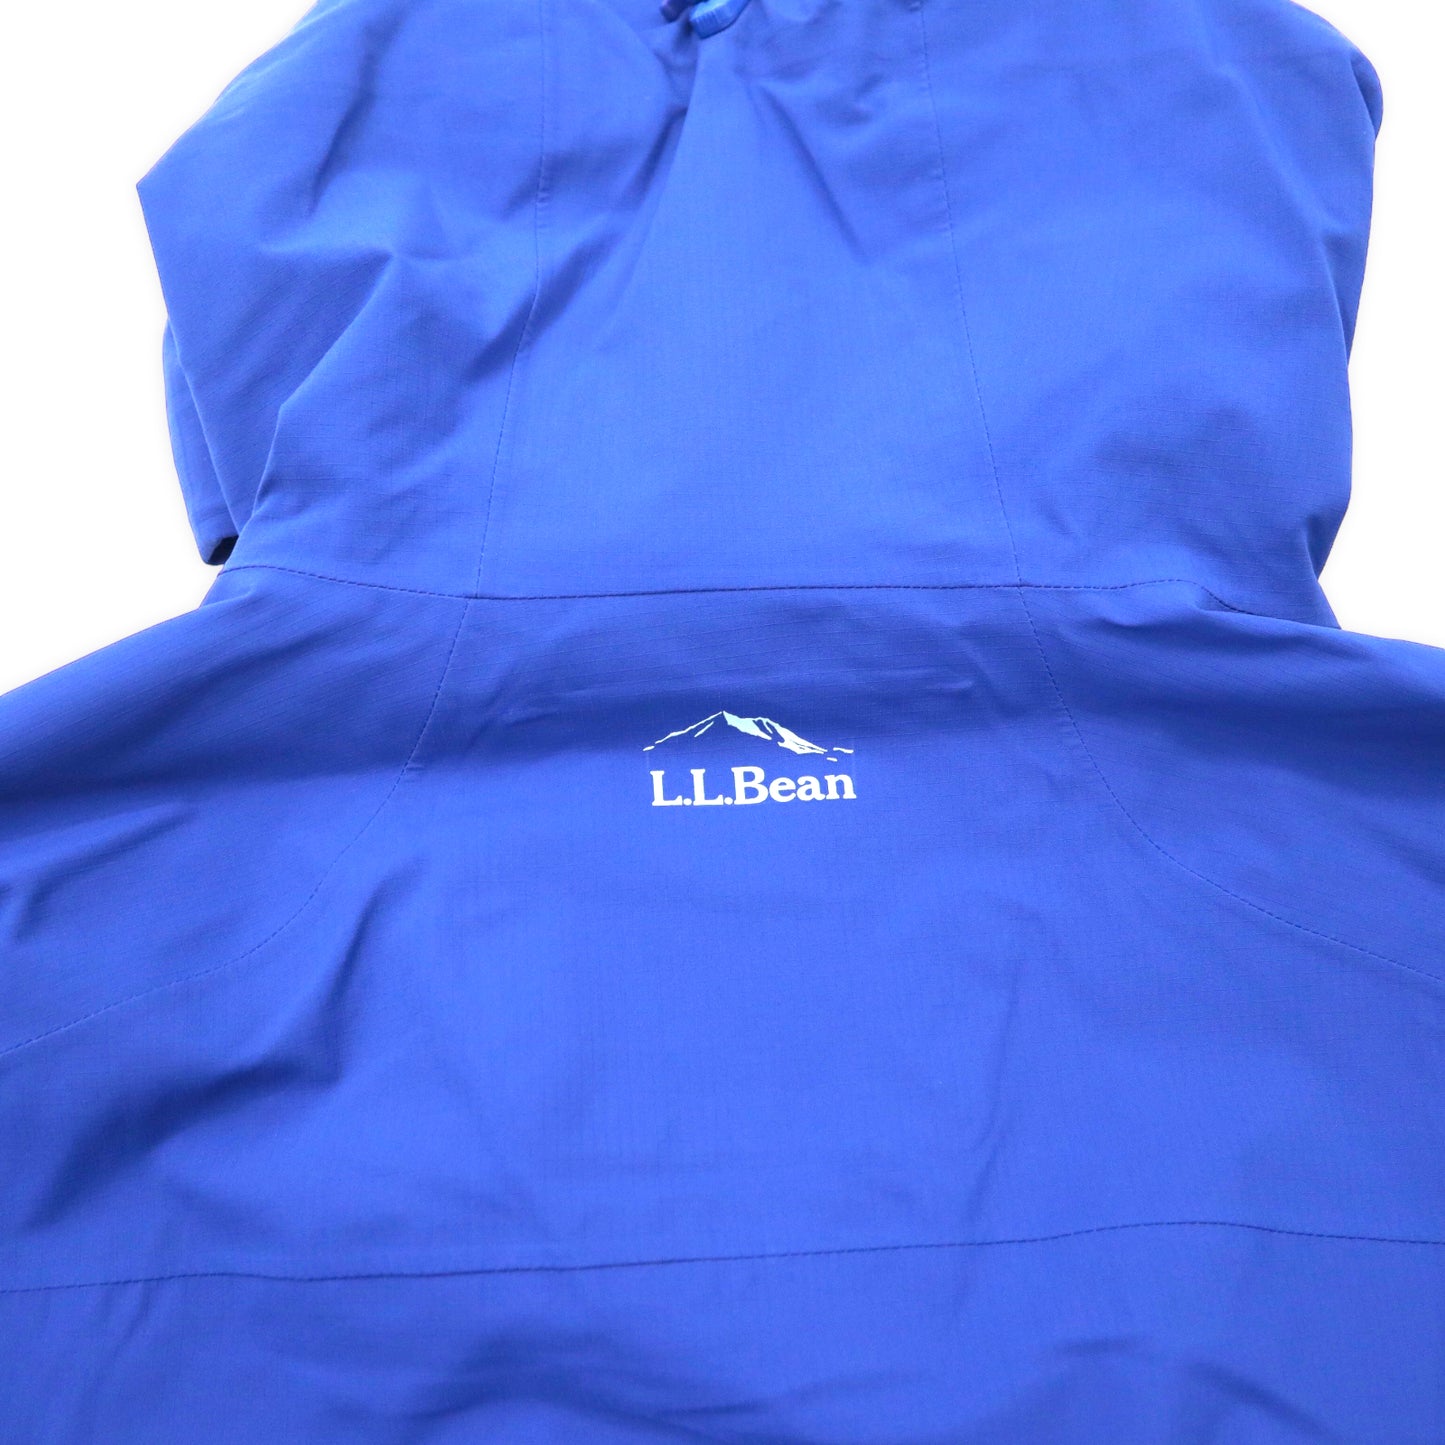 L.L.Bean クレスタ ストレッチ レイン ジャケット M ブルー ナイロン 防水 Cresta Stretch Rain Jacket 509013 未使用品